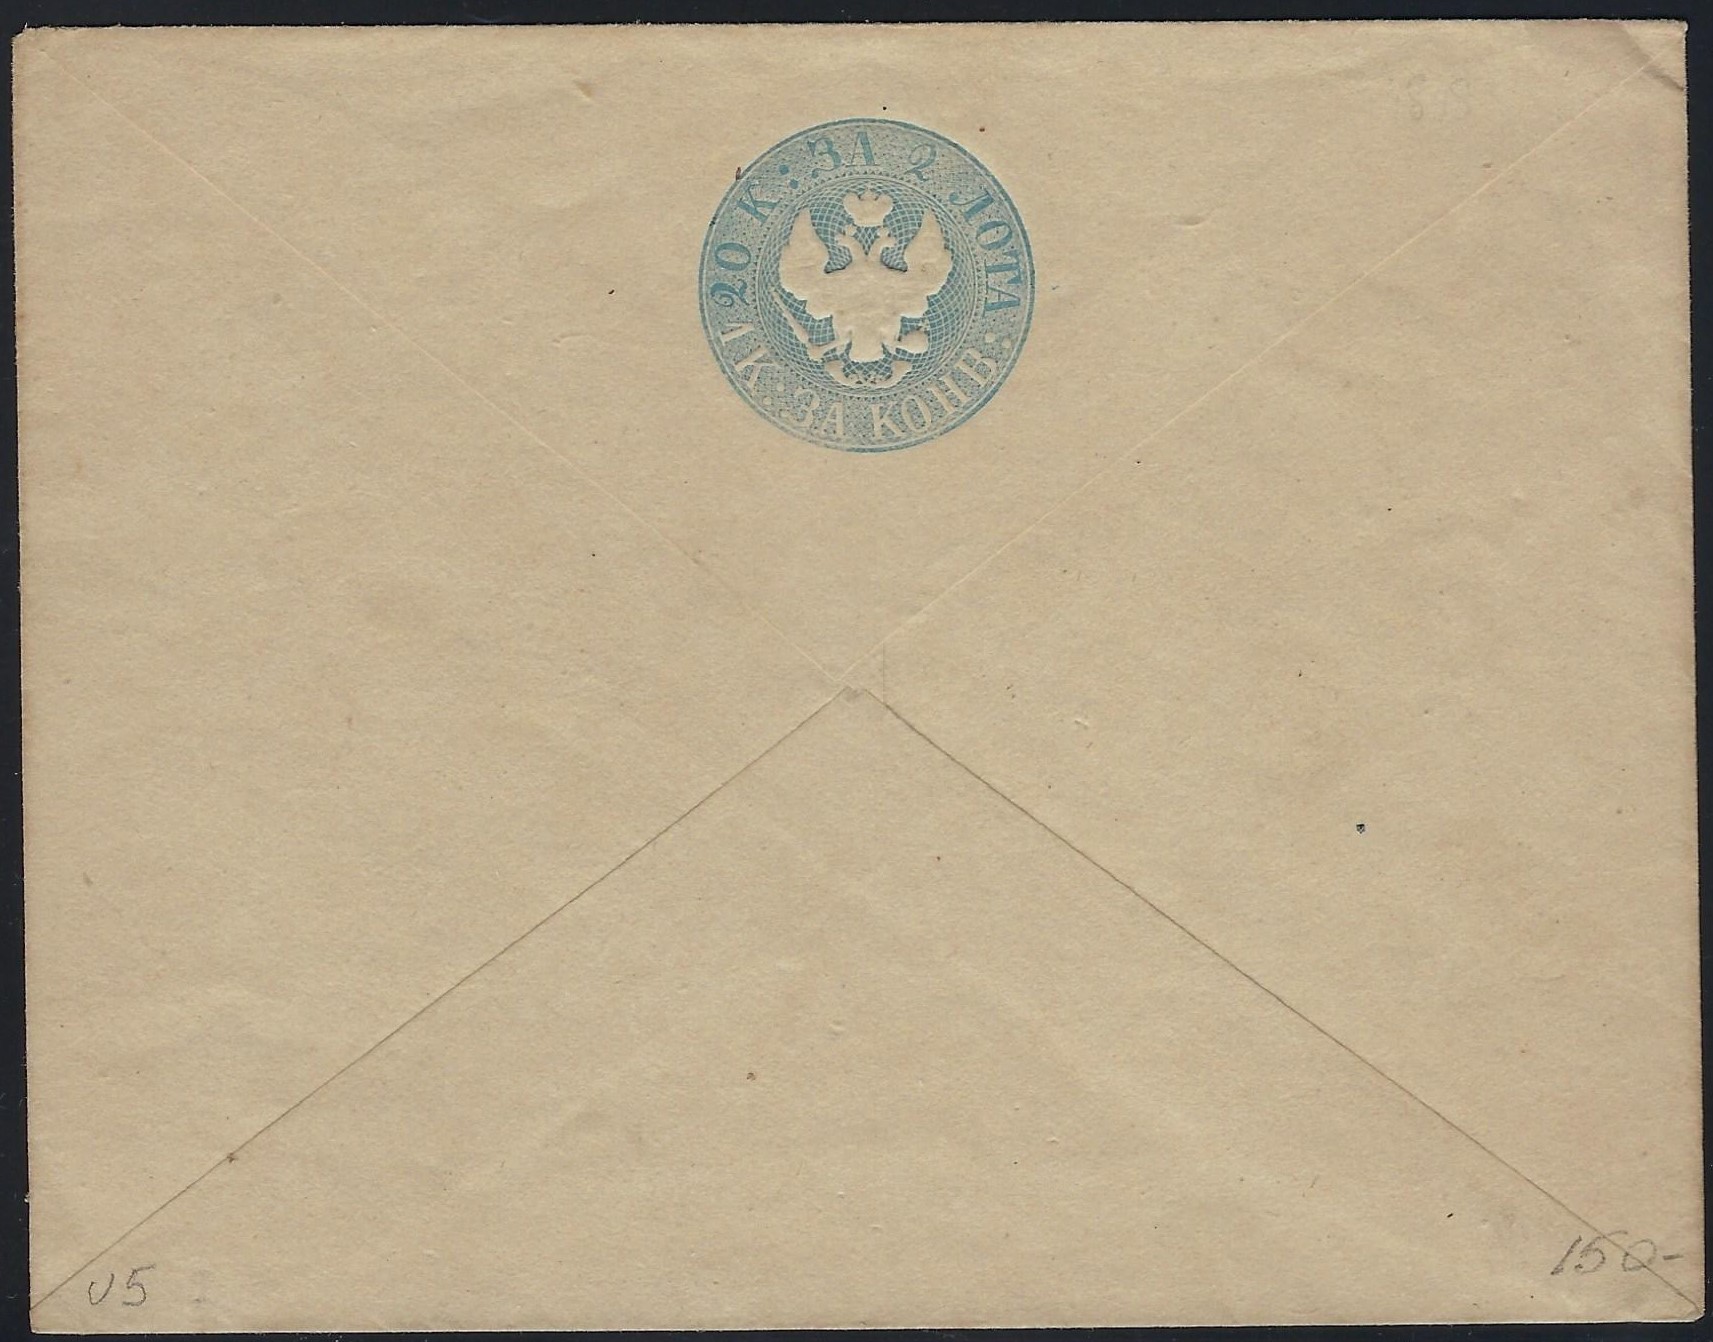 Postal Stationery - Imperial Russia 1848 issue (narrow tail) Scott 21 Michel U5 